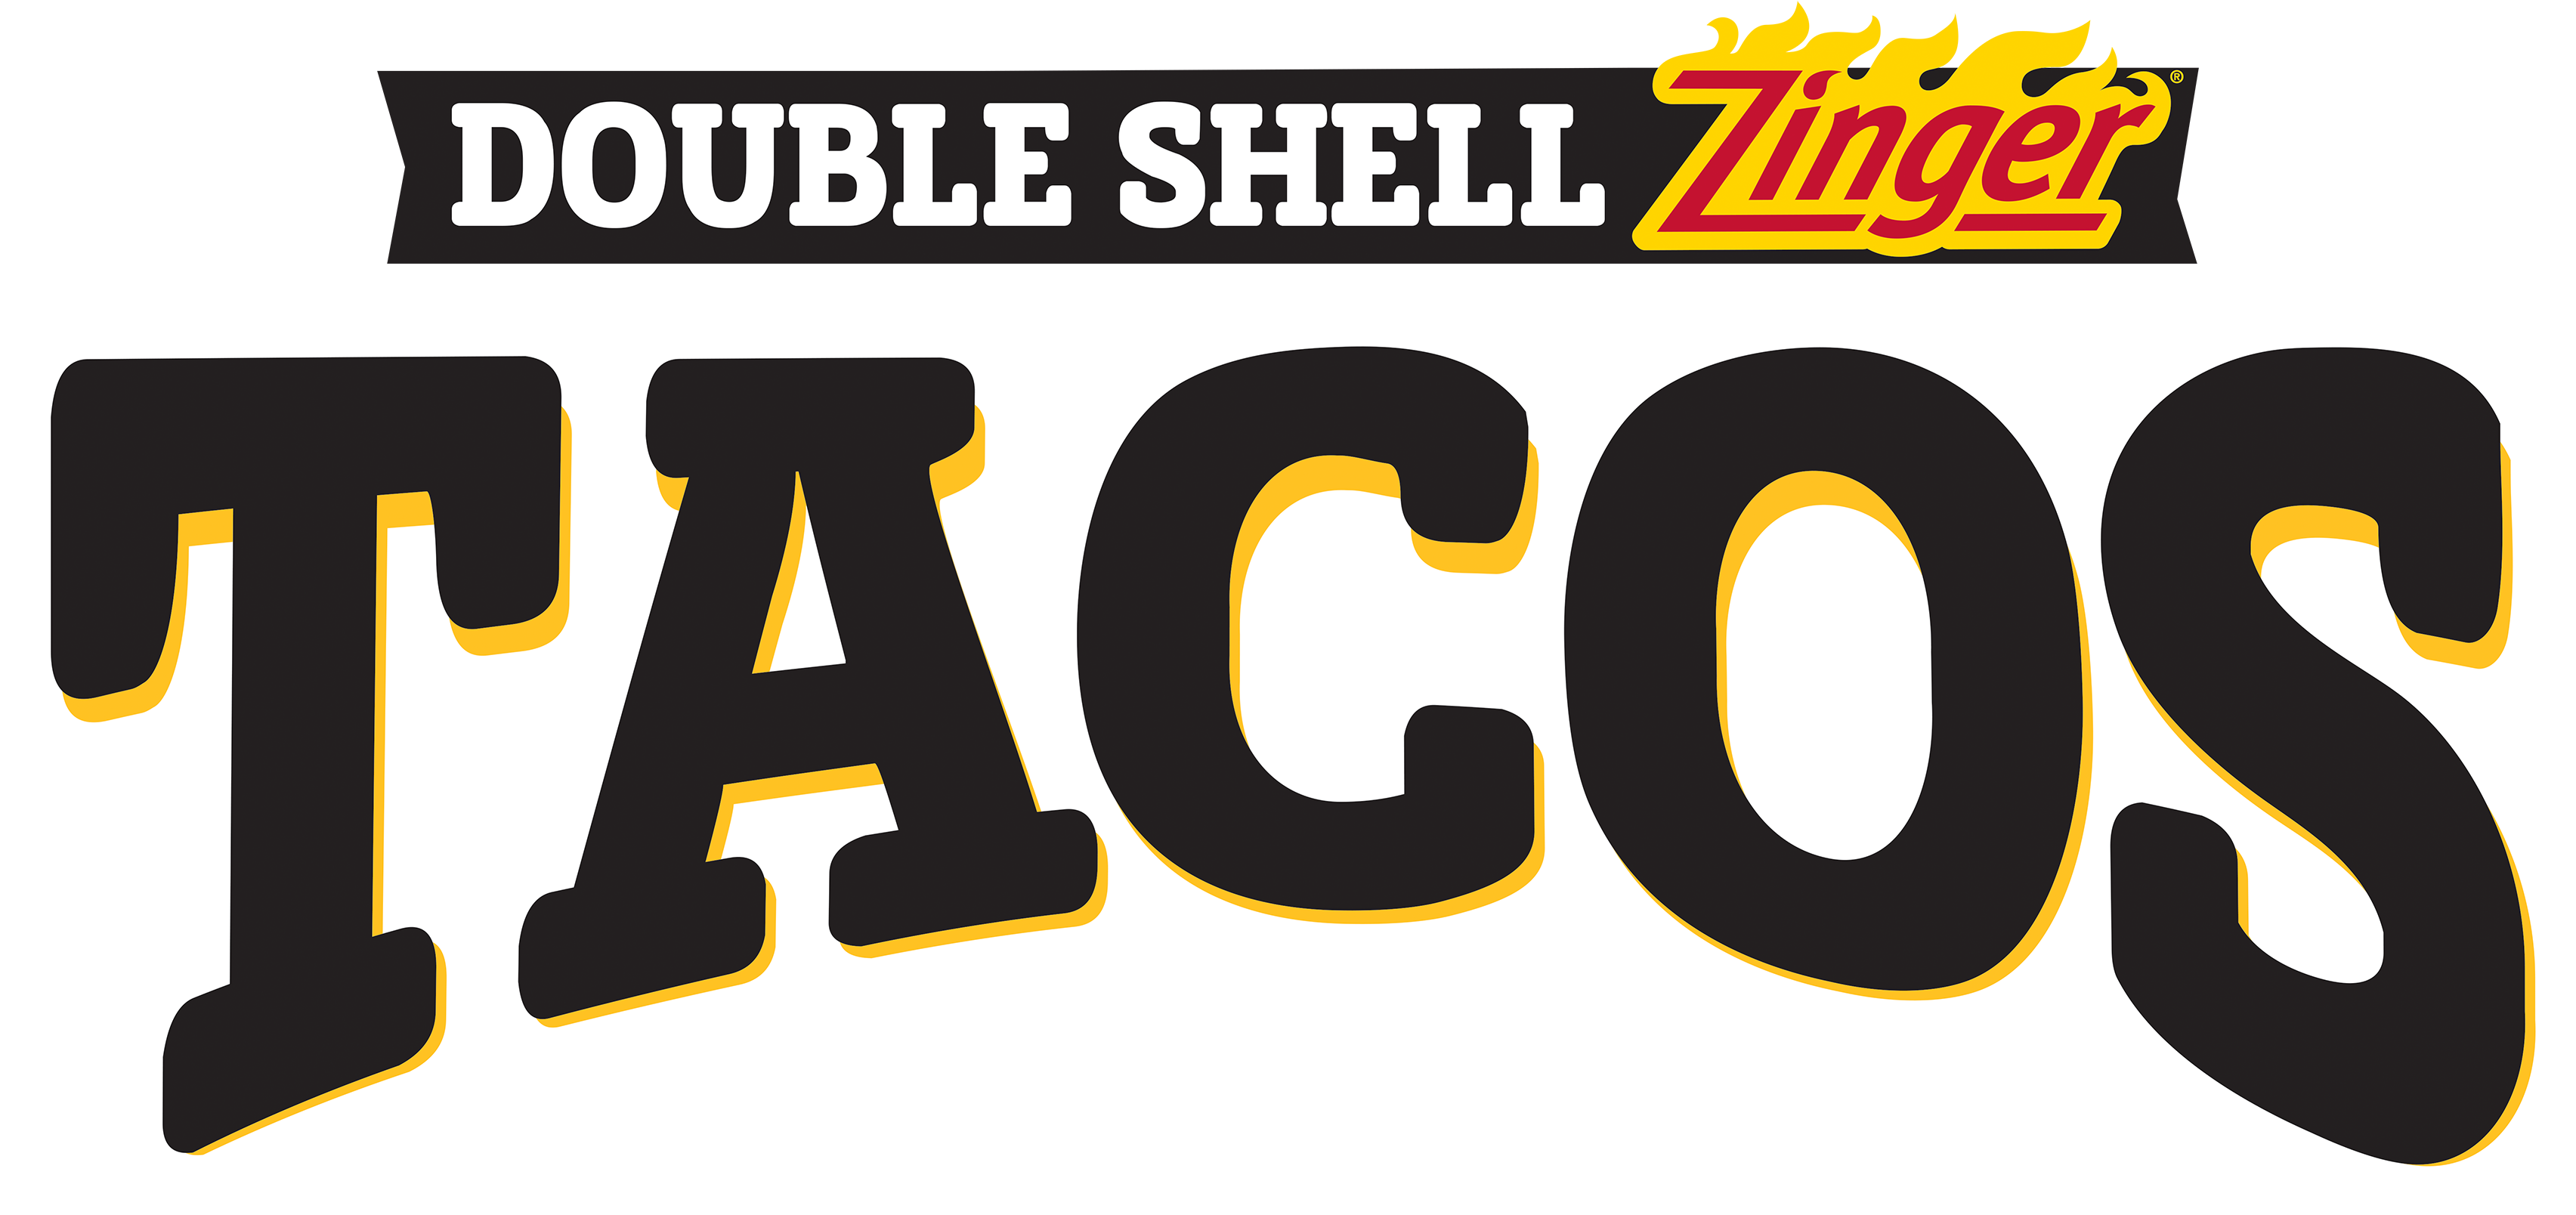 Kfc Double Shell Zinger Taco Logo - Kfc (3543x1771), Png Download